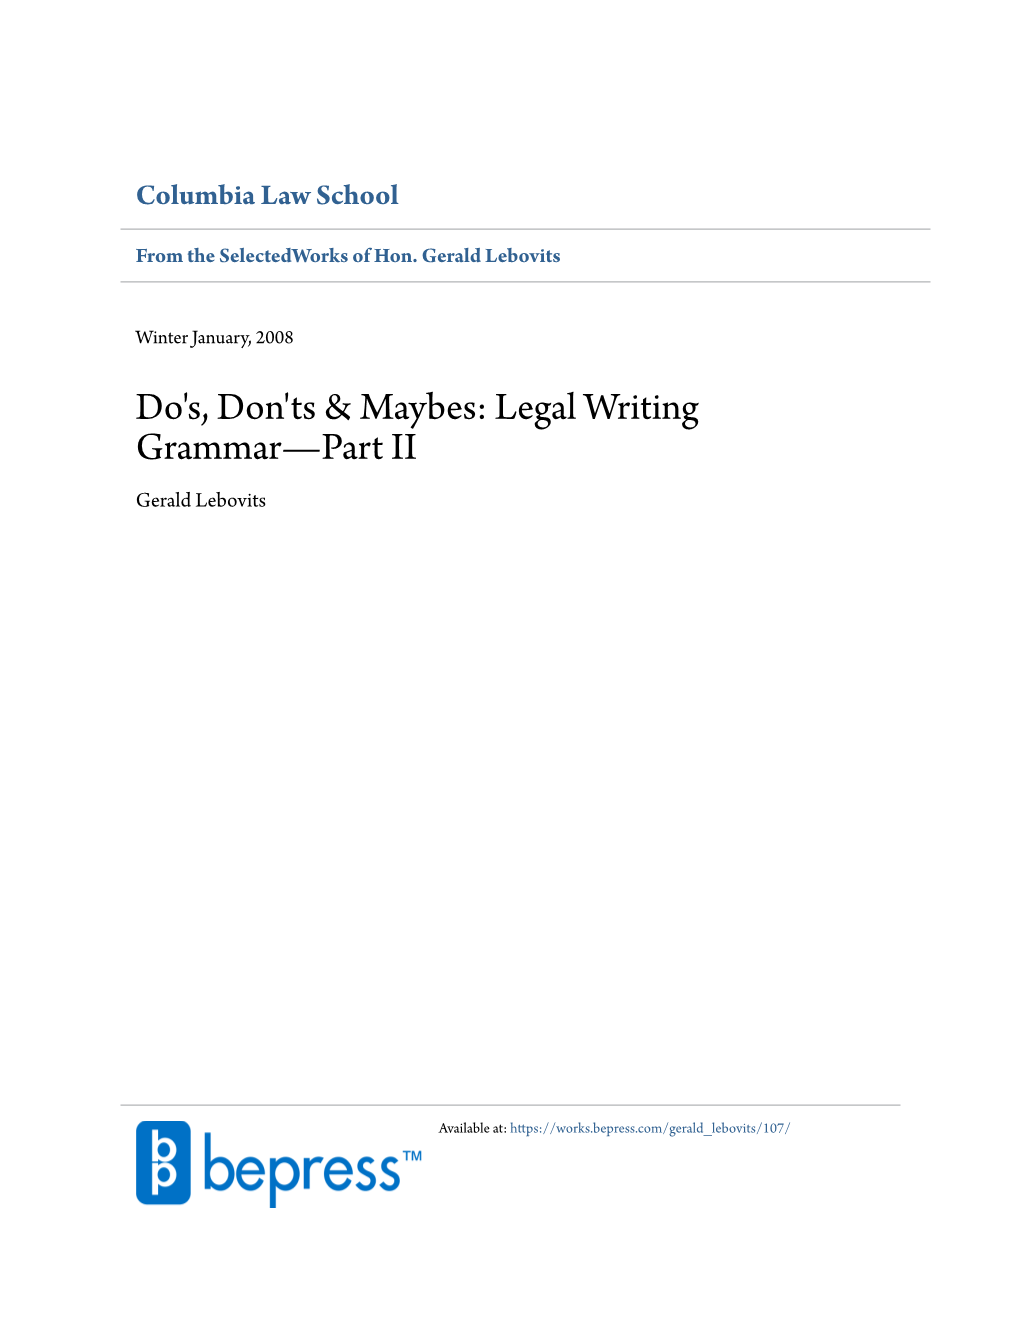 Legal Writing Grammar—Part II Gerald Lebovits